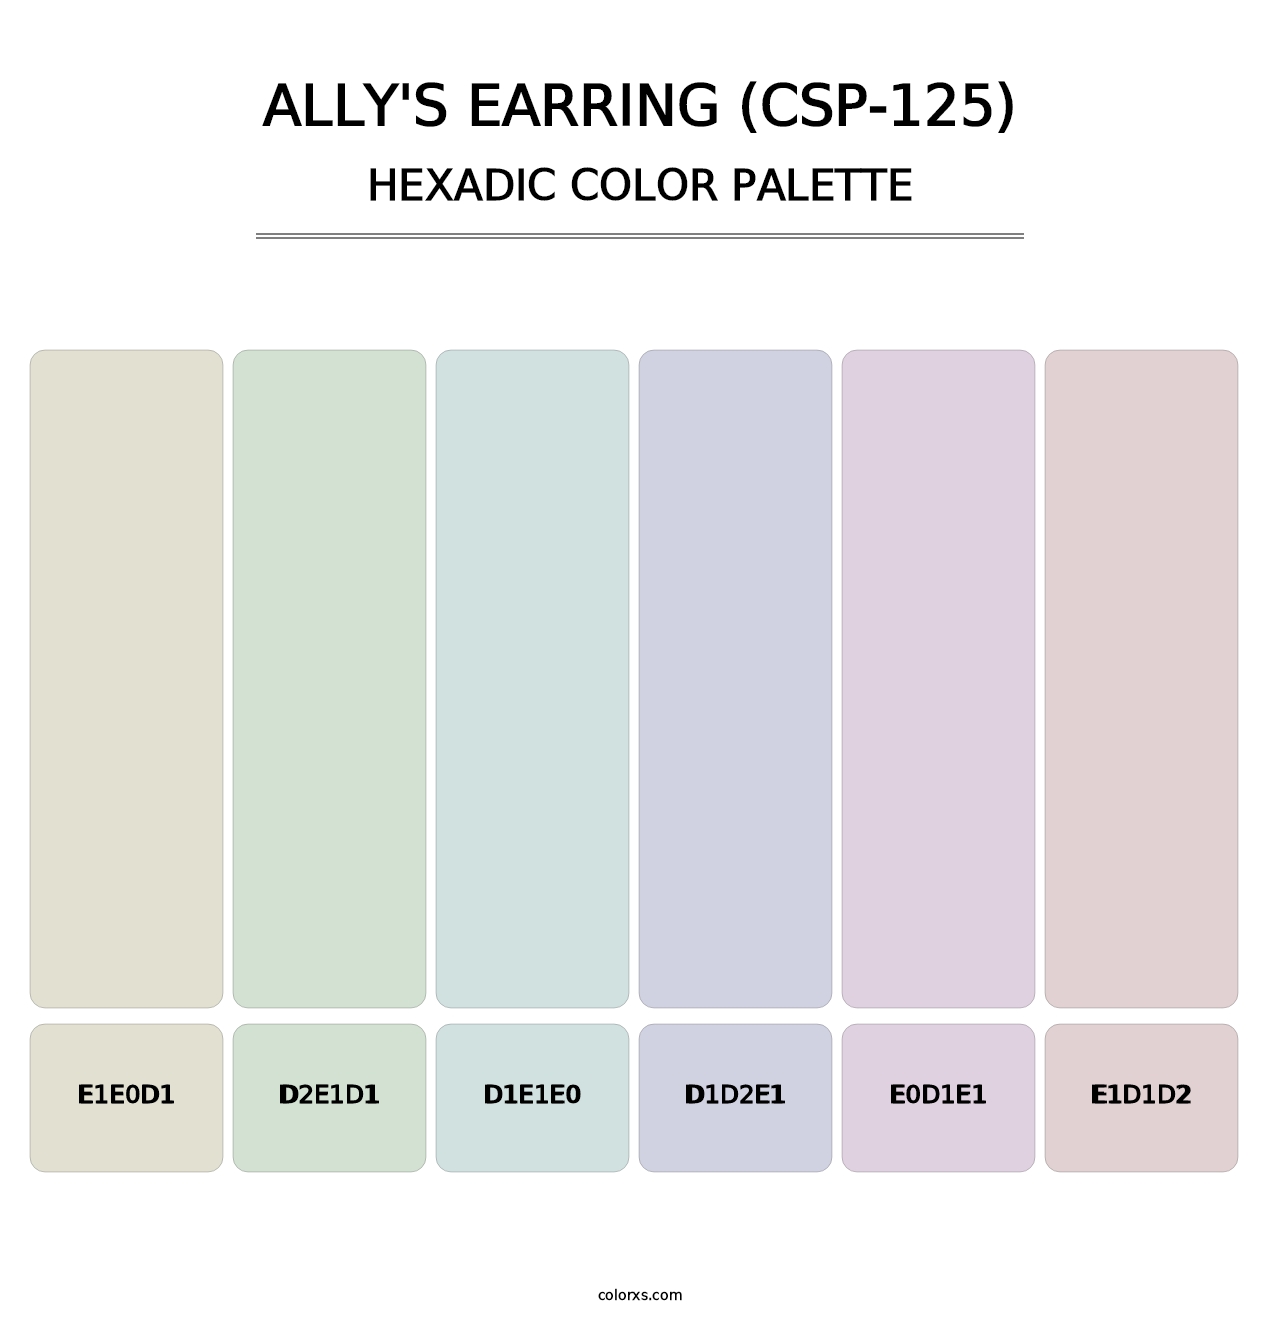 Ally's Earring (CSP-125) - Hexadic Color Palette